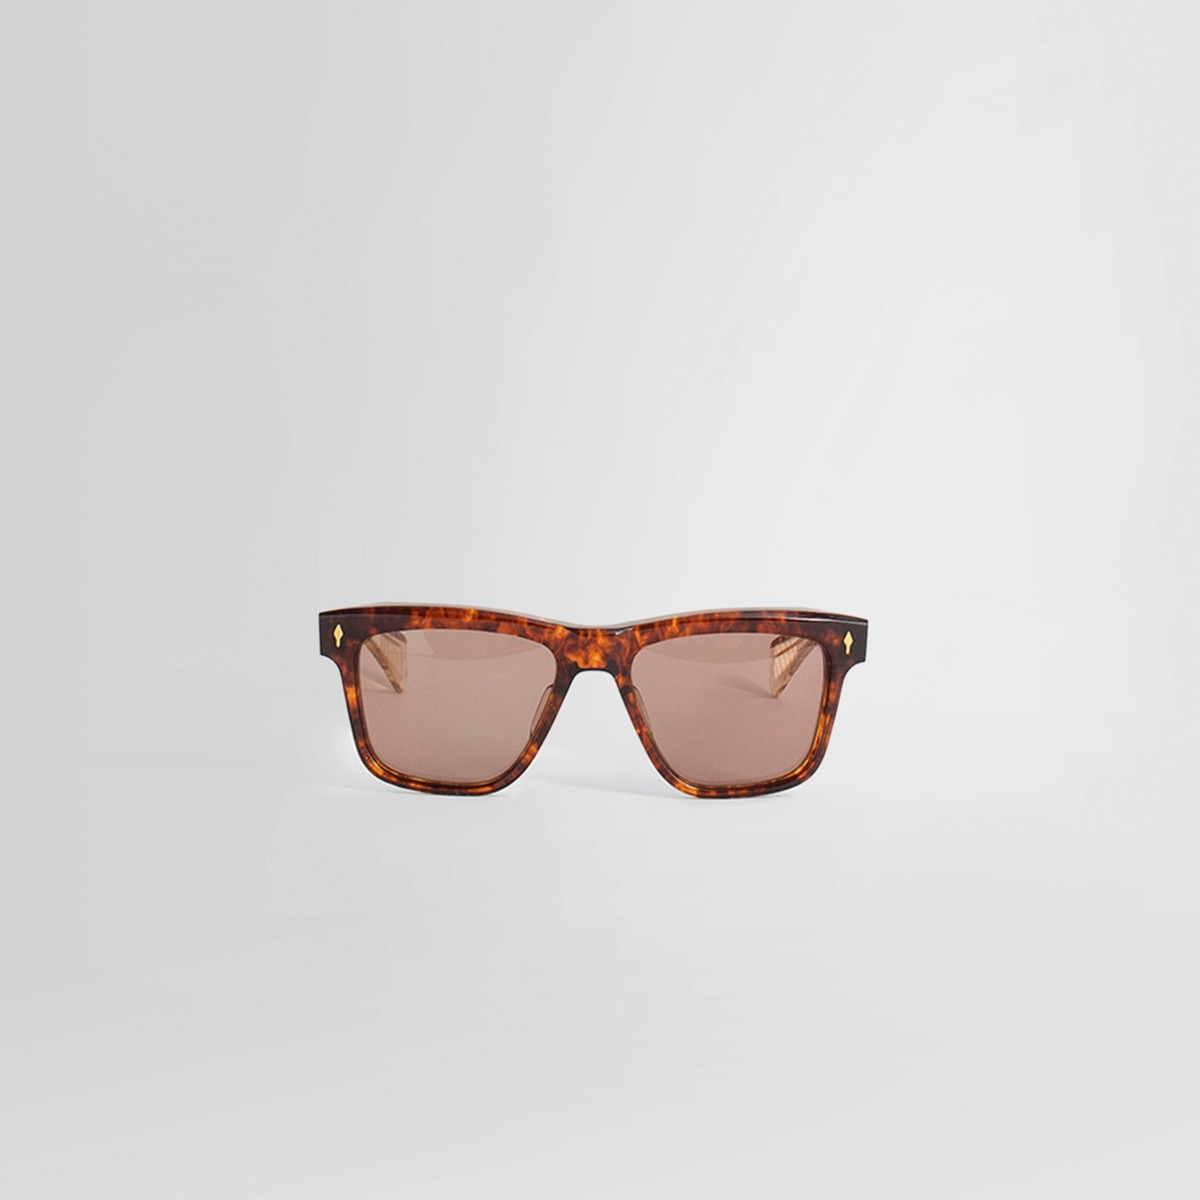 Antonioli - Gents Sunglasses in Brown Jacques Marie Mage GOOFASH